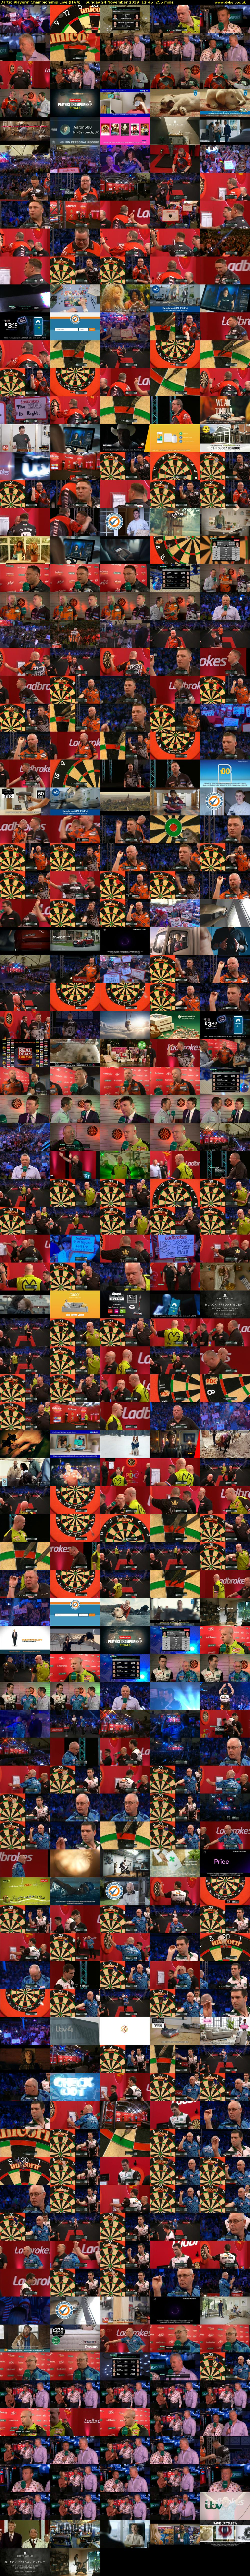 Darts: Players' Championship Live (ITV4) Sunday 24 November 2019 12:45 - 17:00